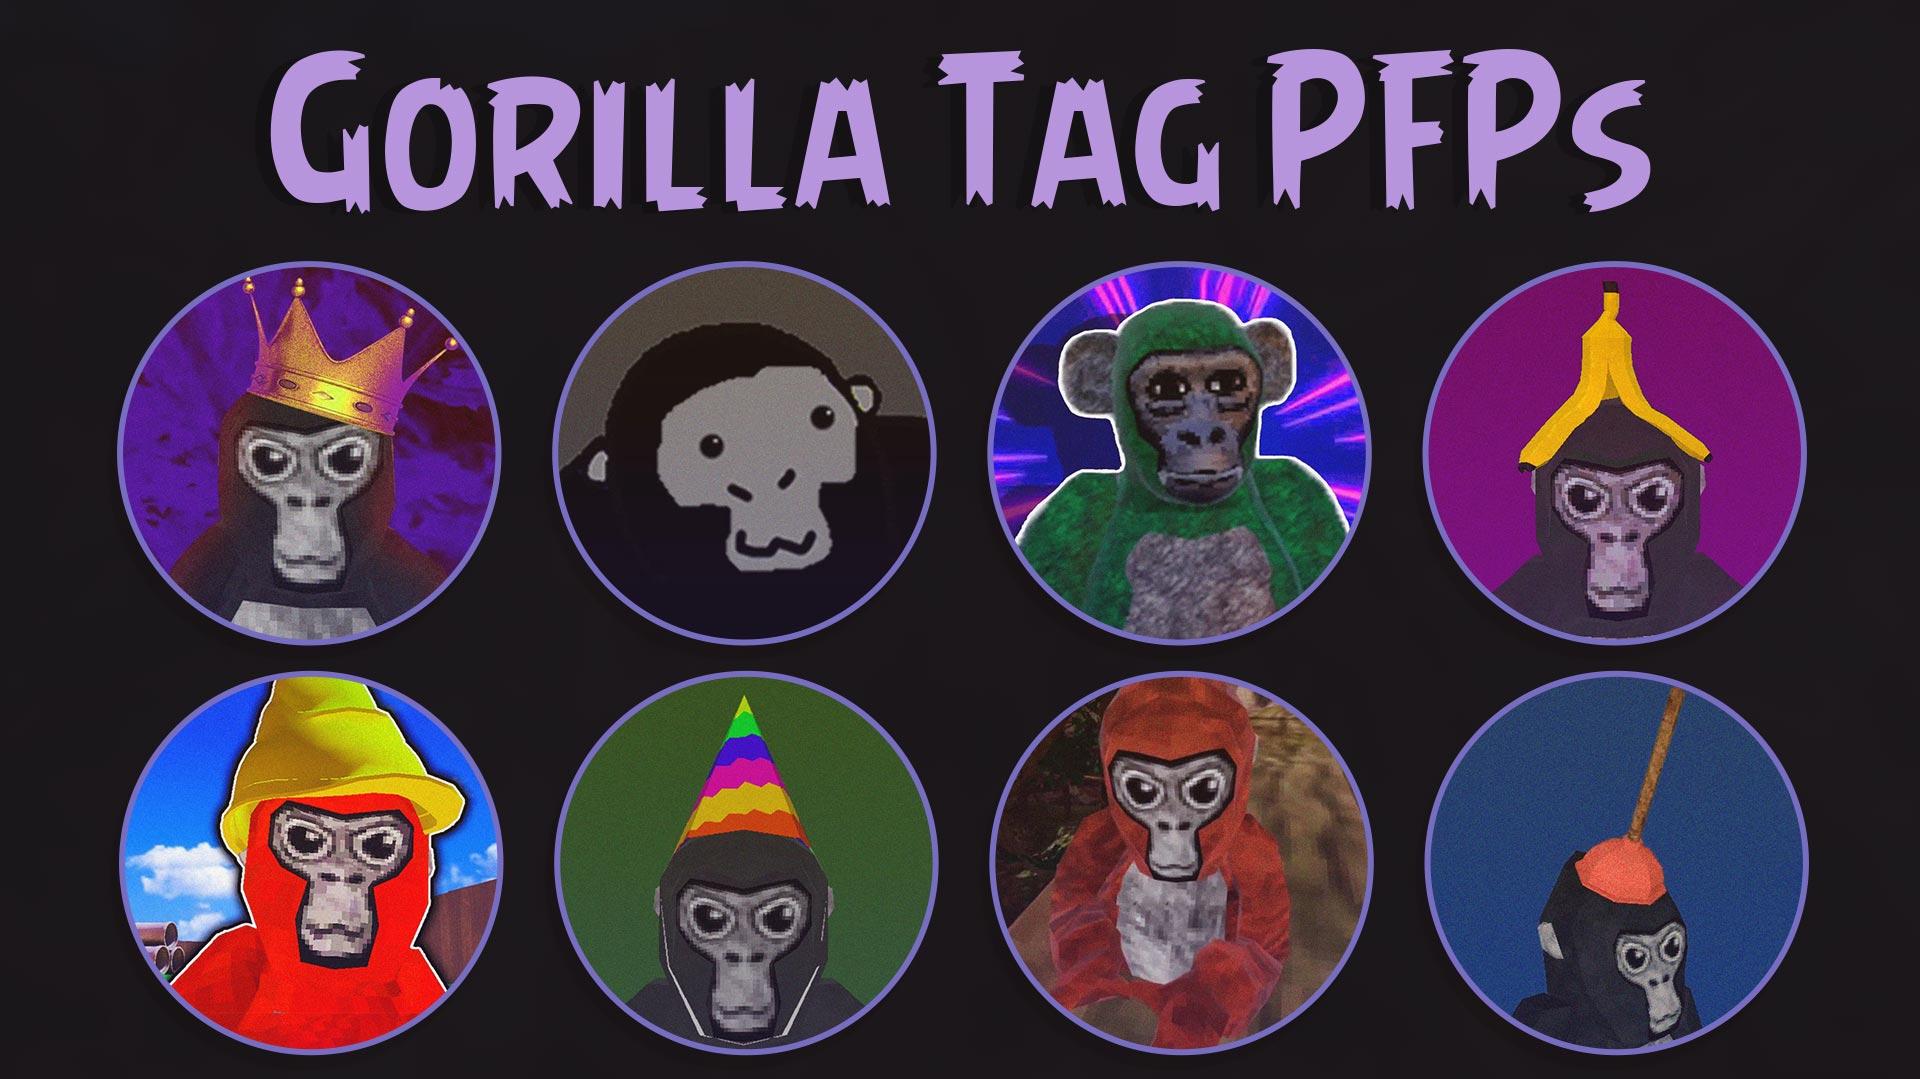 Best Gorilla Tag Pfp For Tiktok Discord Instagram Etc